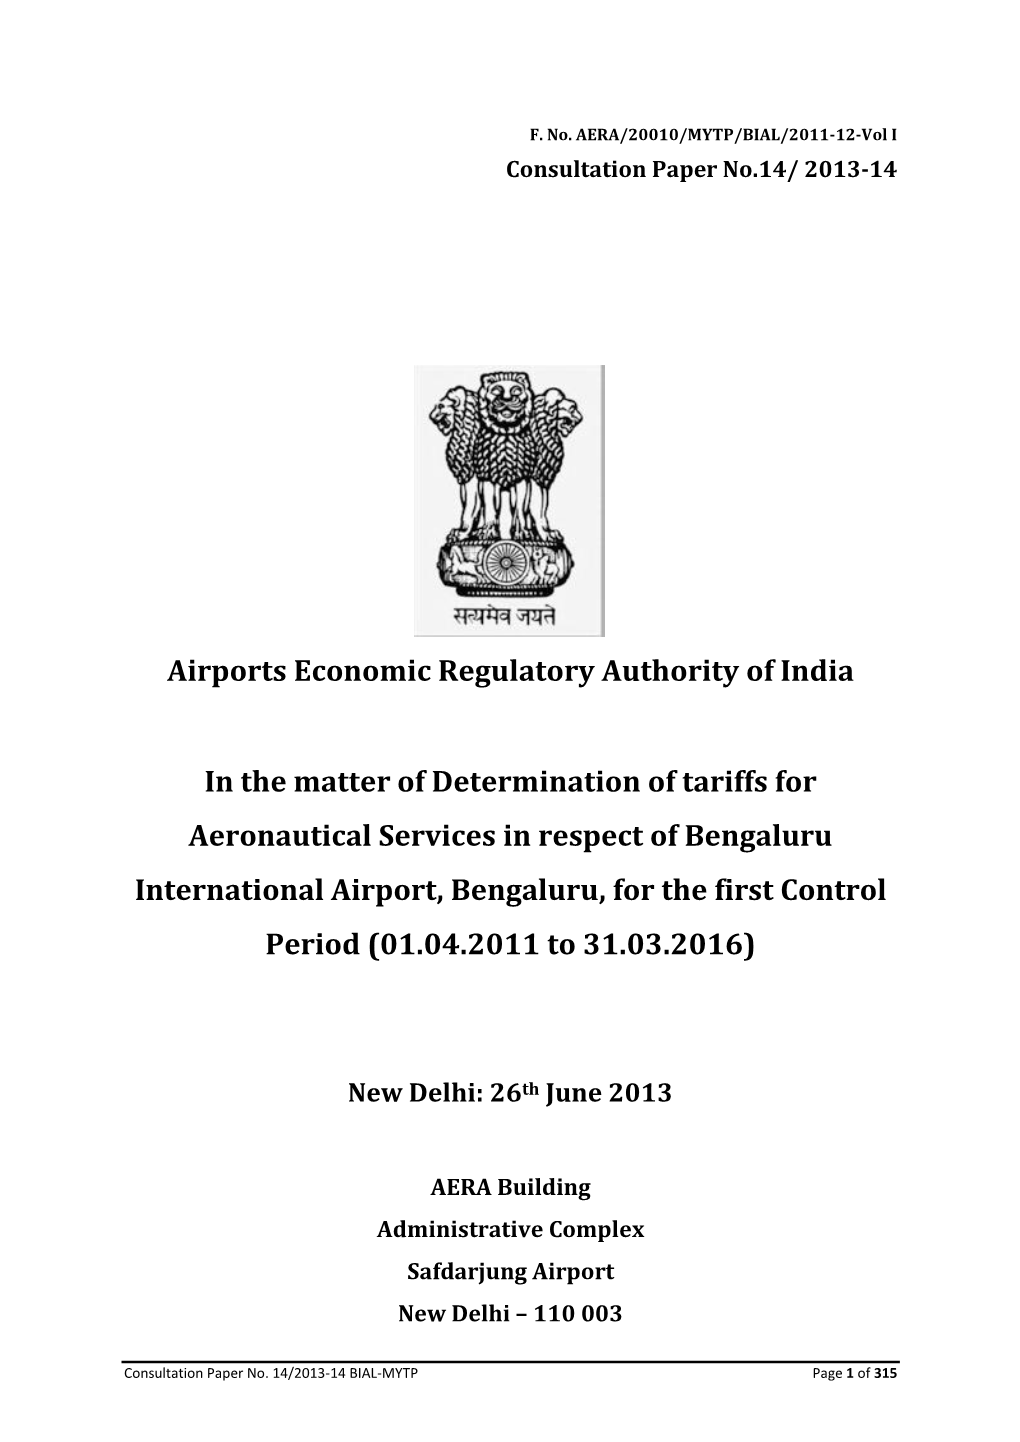 Airports Economic Regulatory Authority of India